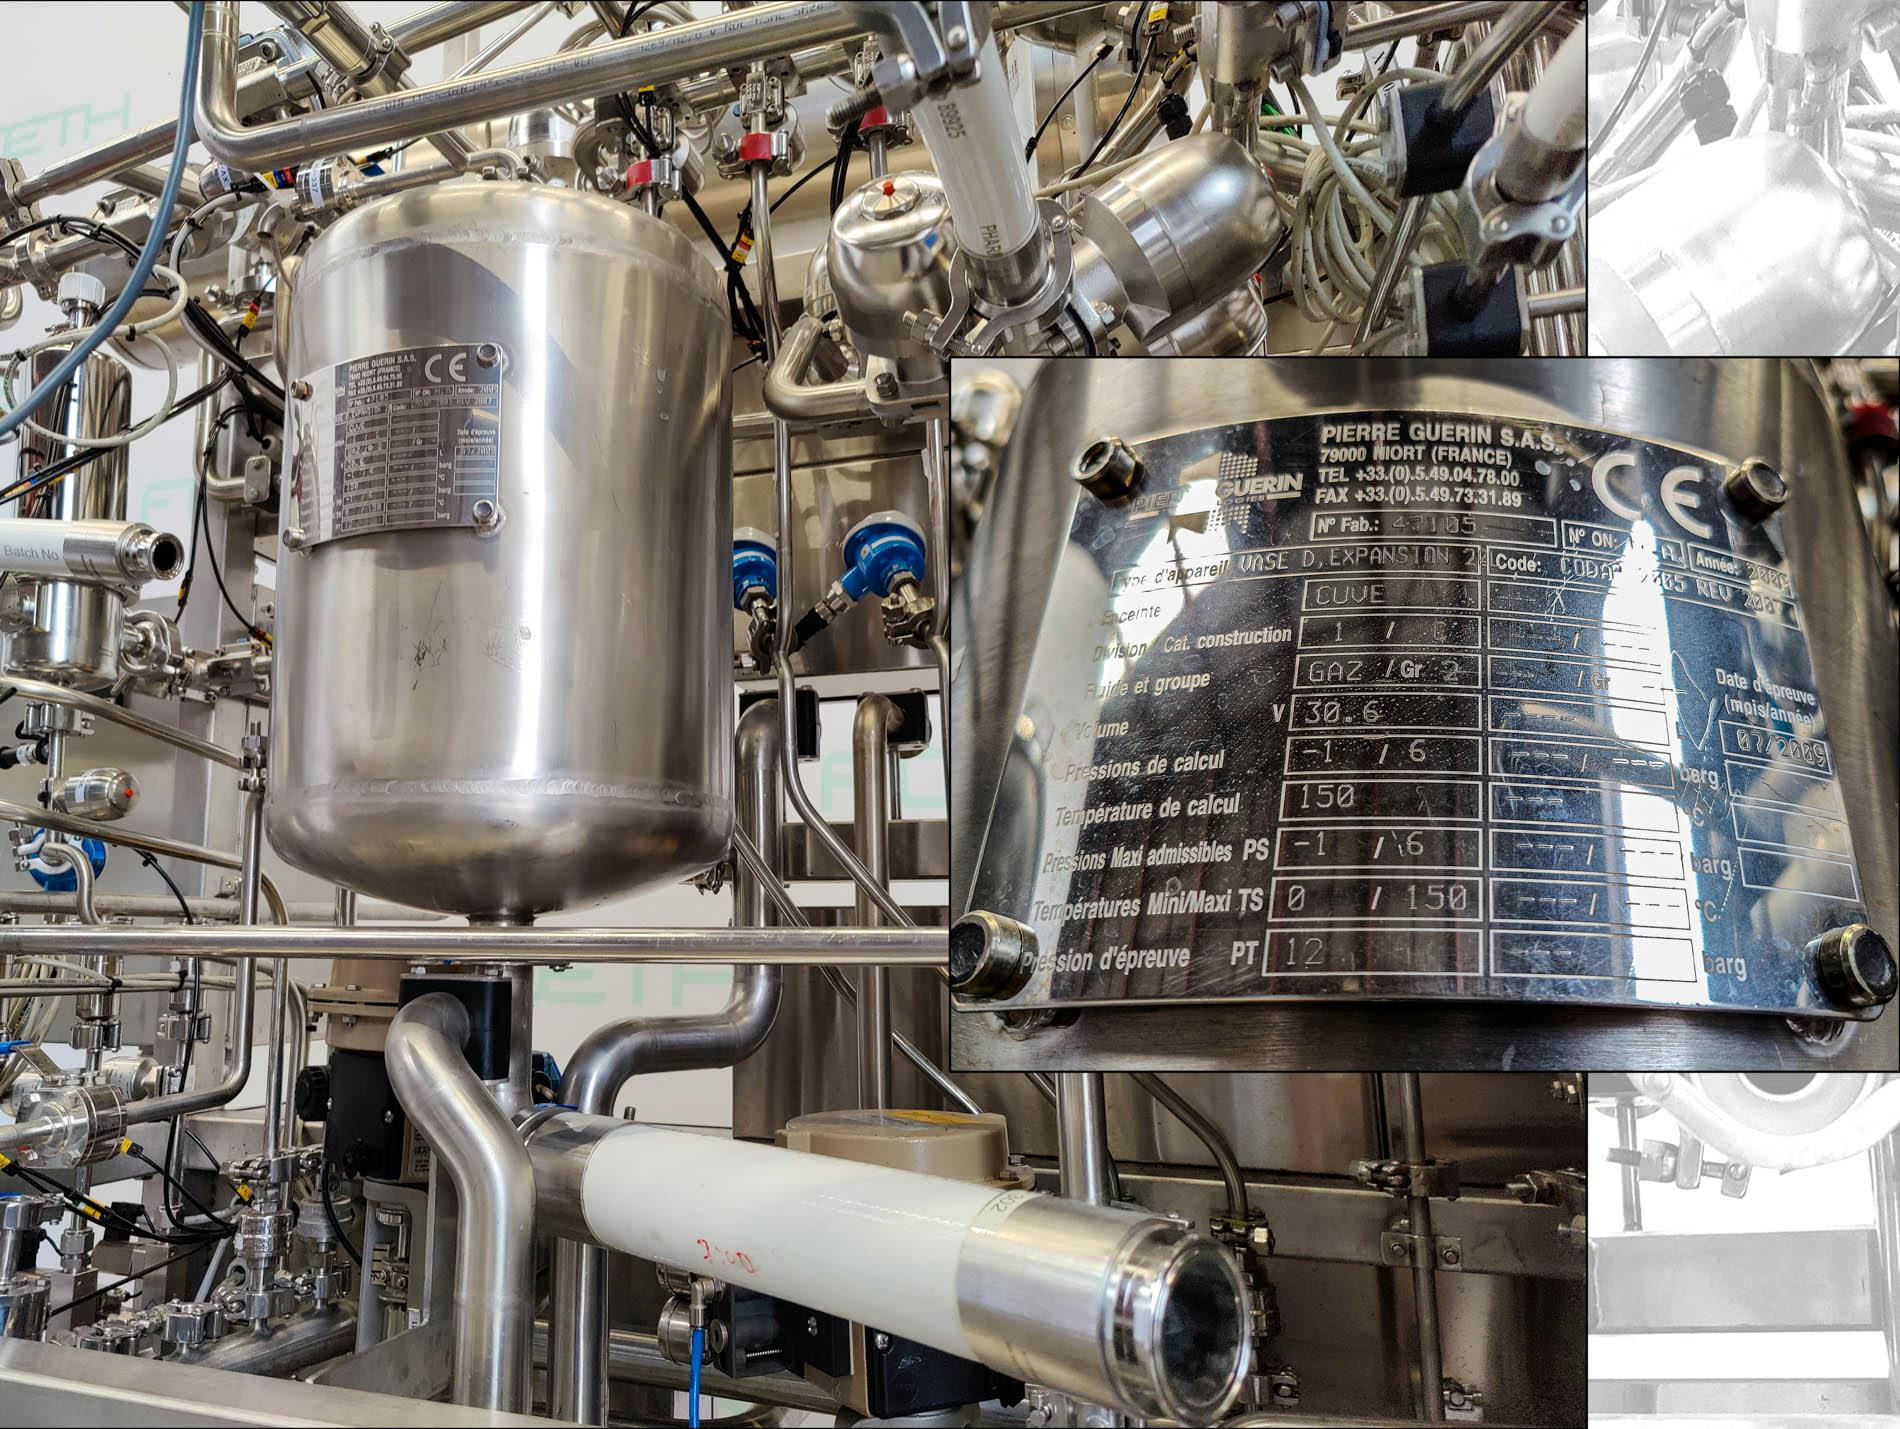 Pierre Guerin Bioreactor 750L - Stainless Steel Reactor - image 12